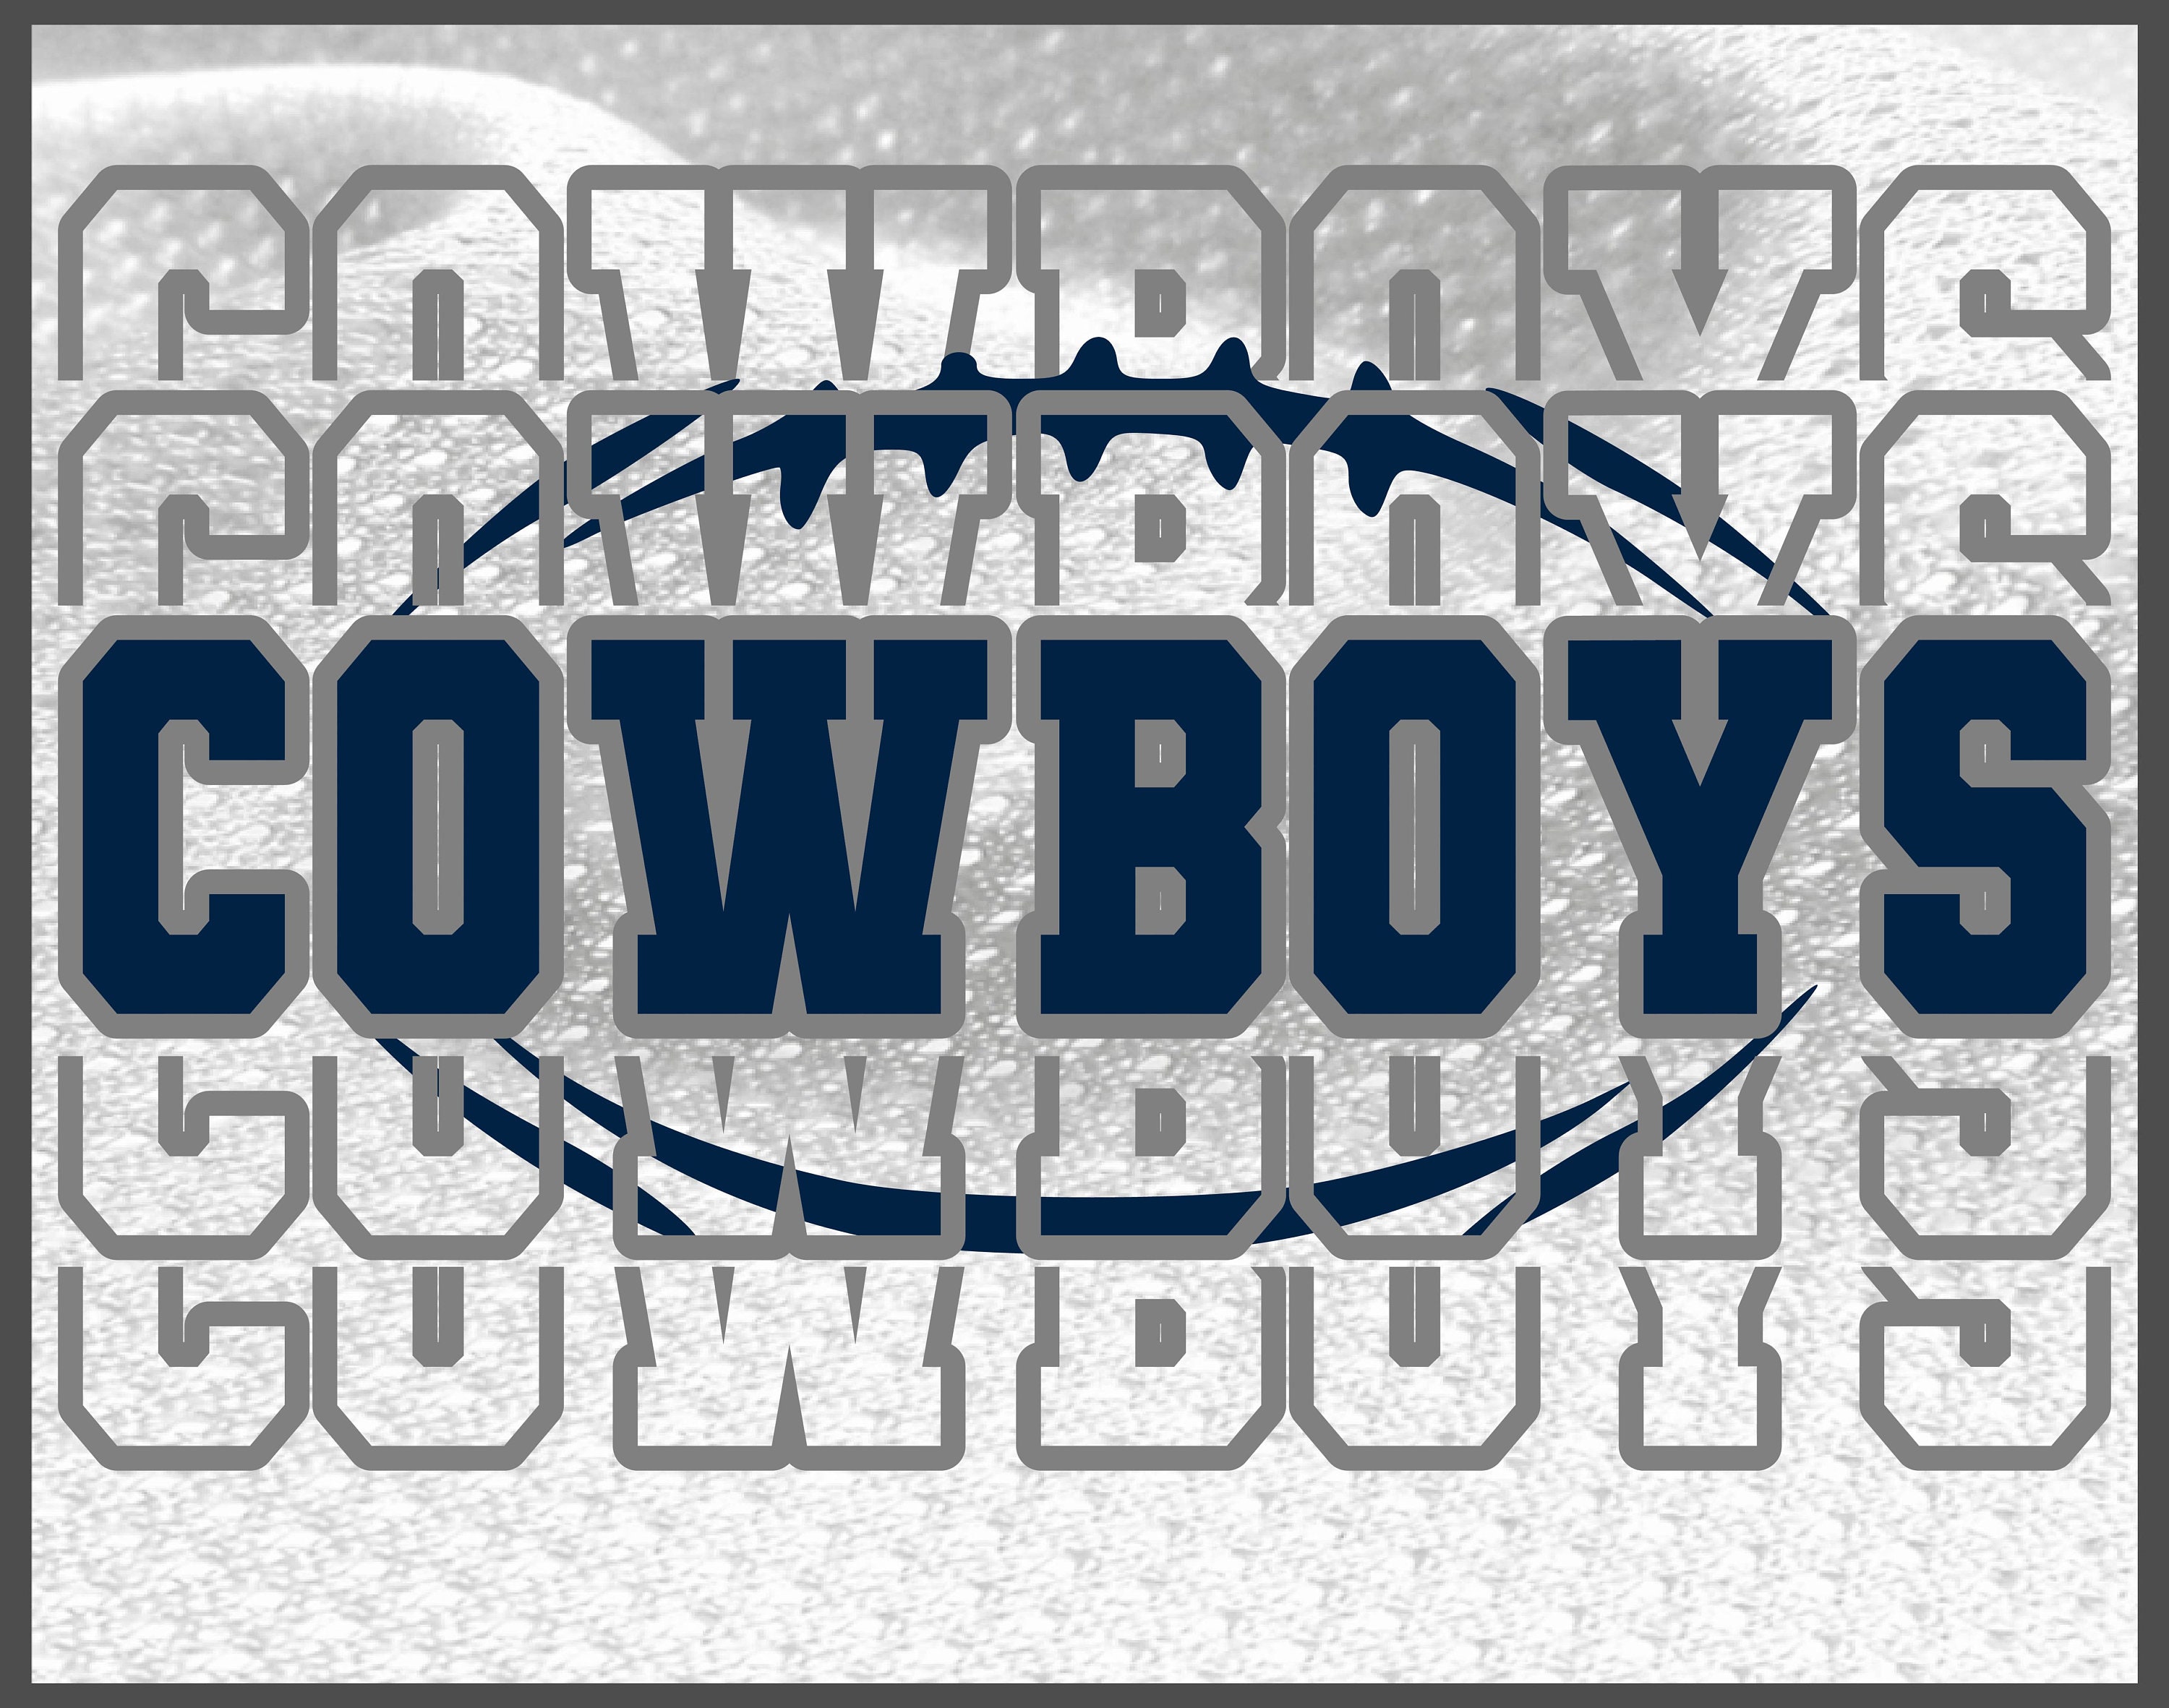 Dallas Cowboys Logo PNG Transparent & SVG Vector - Freebie Supply